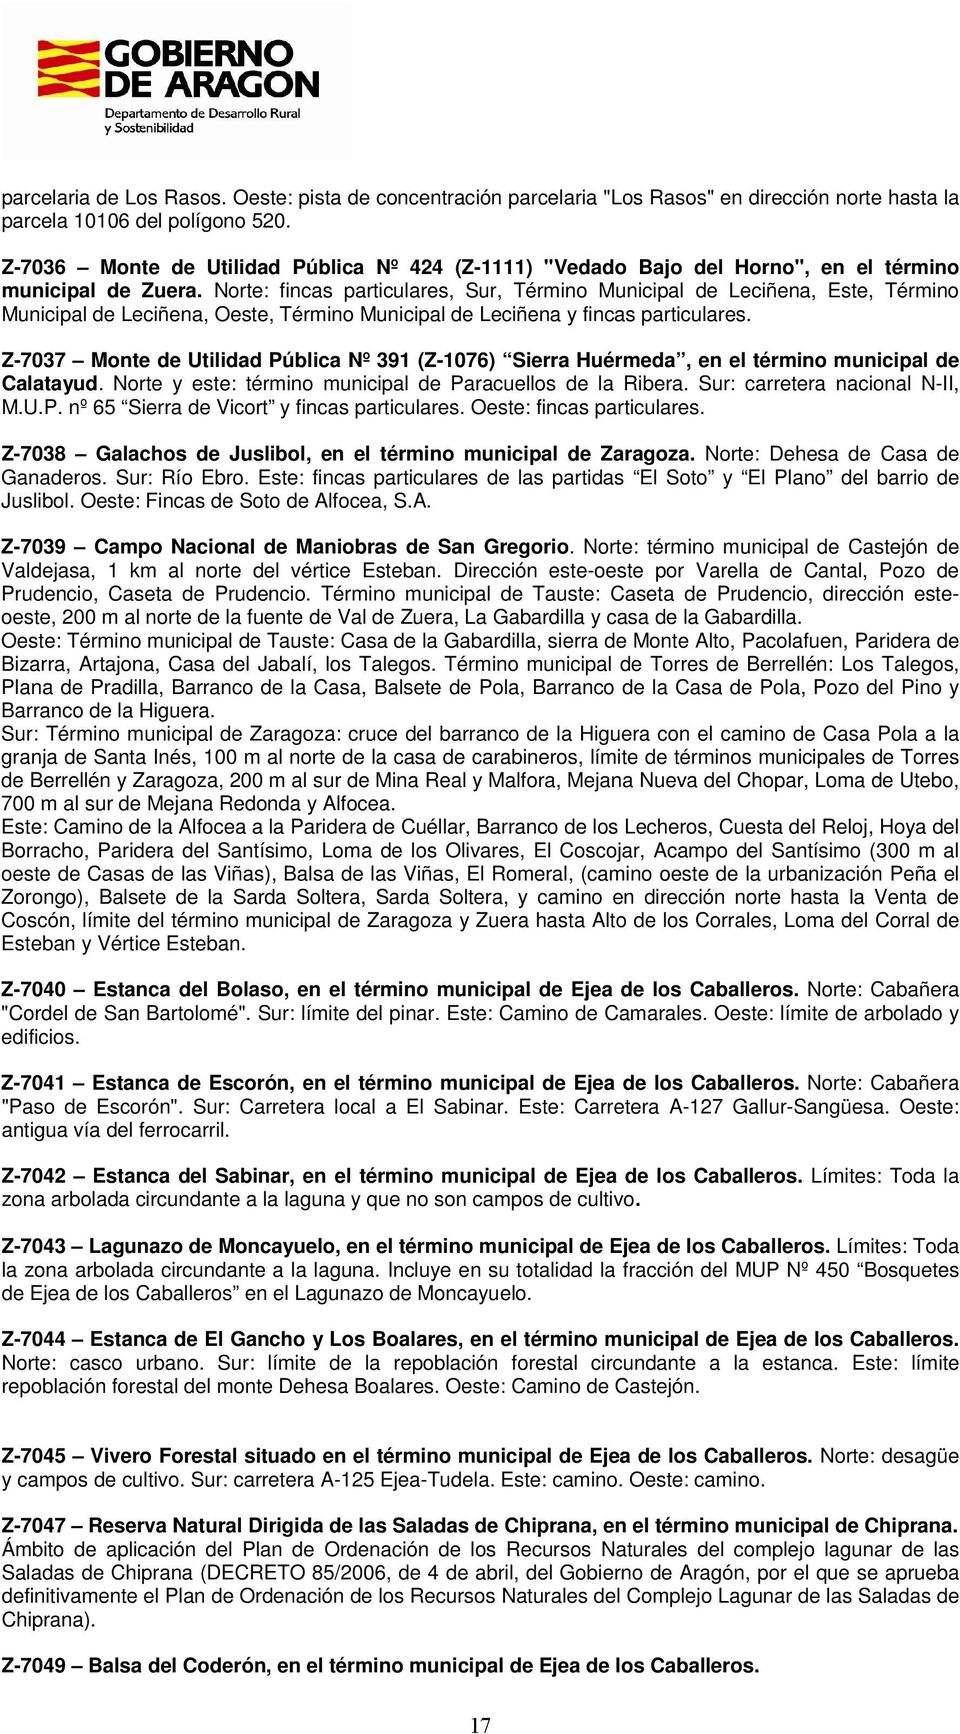 Norte: fincas particulares, Sur, Término Municipal de Leciñena, Este, Término Municipal de Leciñena, Oeste, Término Municipal de Leciñena y fincas particulares.